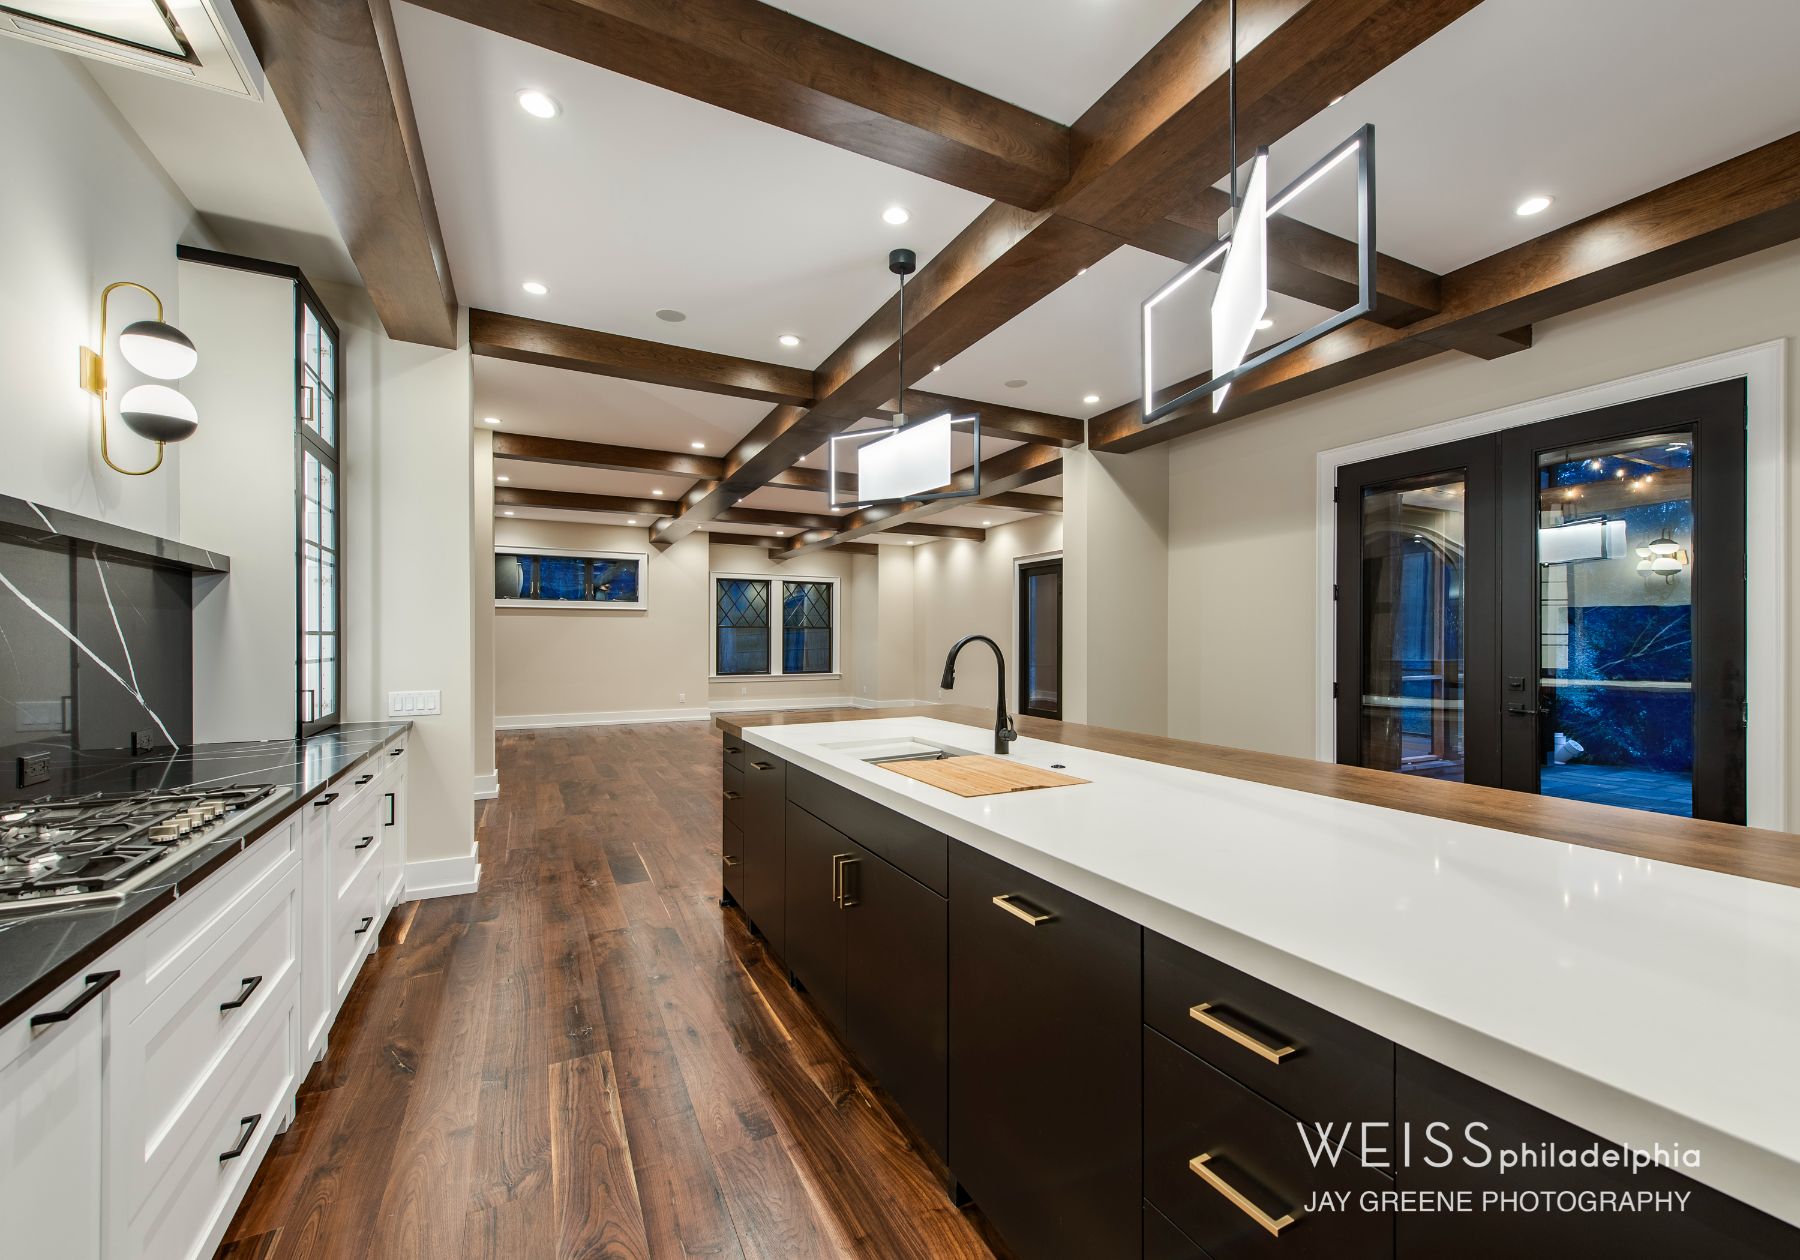 best custom homes wayne pa - design home studios - modern kitchen - dark cabinets - exposed beams - white countertops - globe lighting